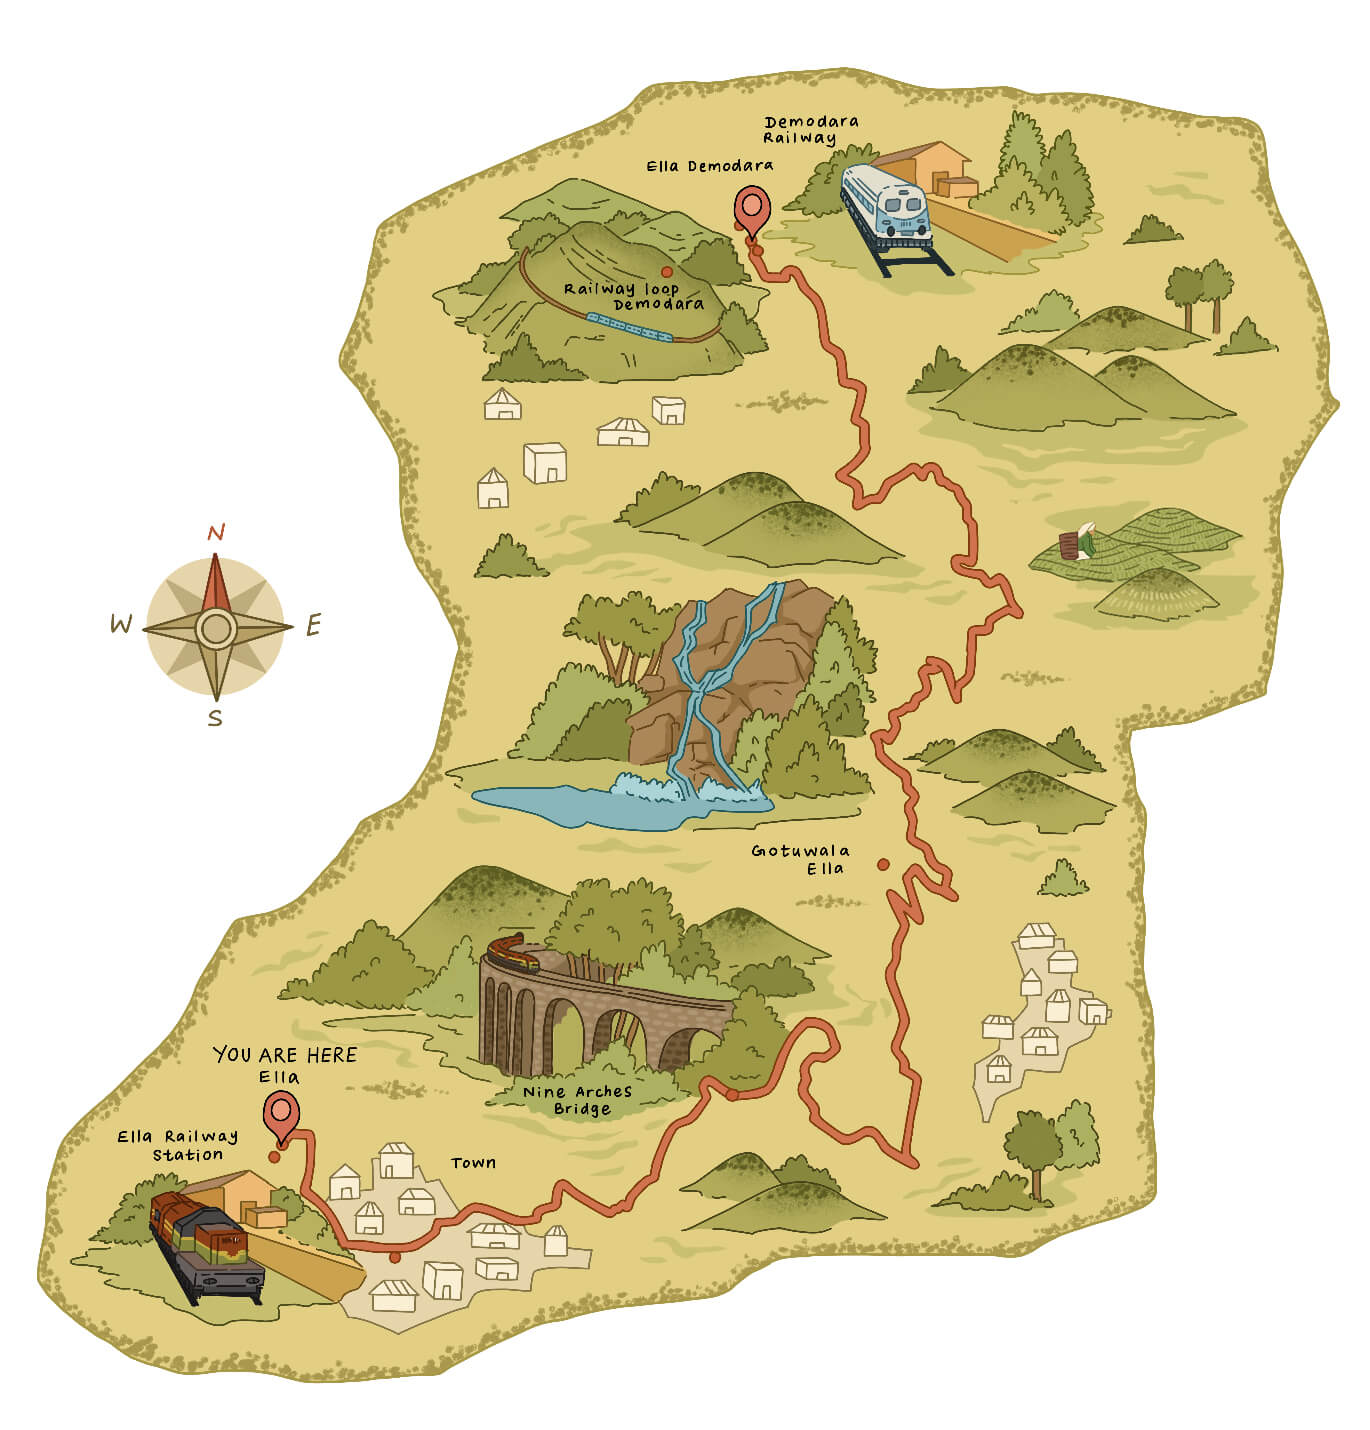 The Pekoe Trail hiking map for stage 16 - Ella to Demodara